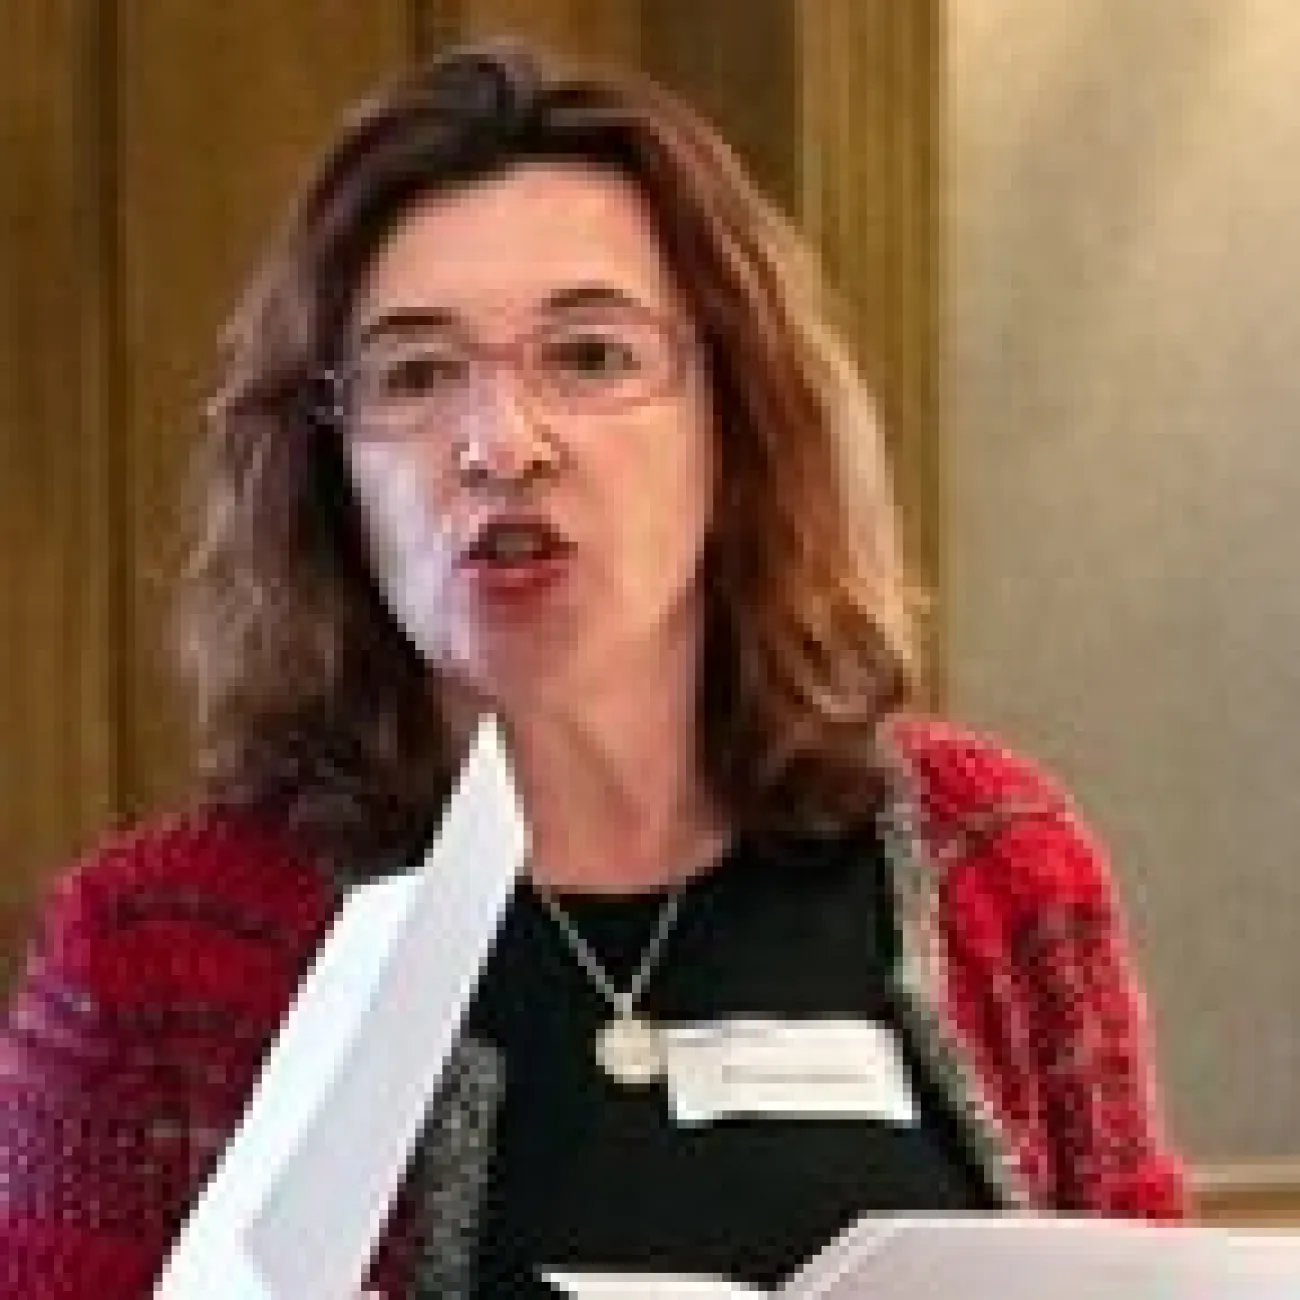 Professor Roumyana Slabakova